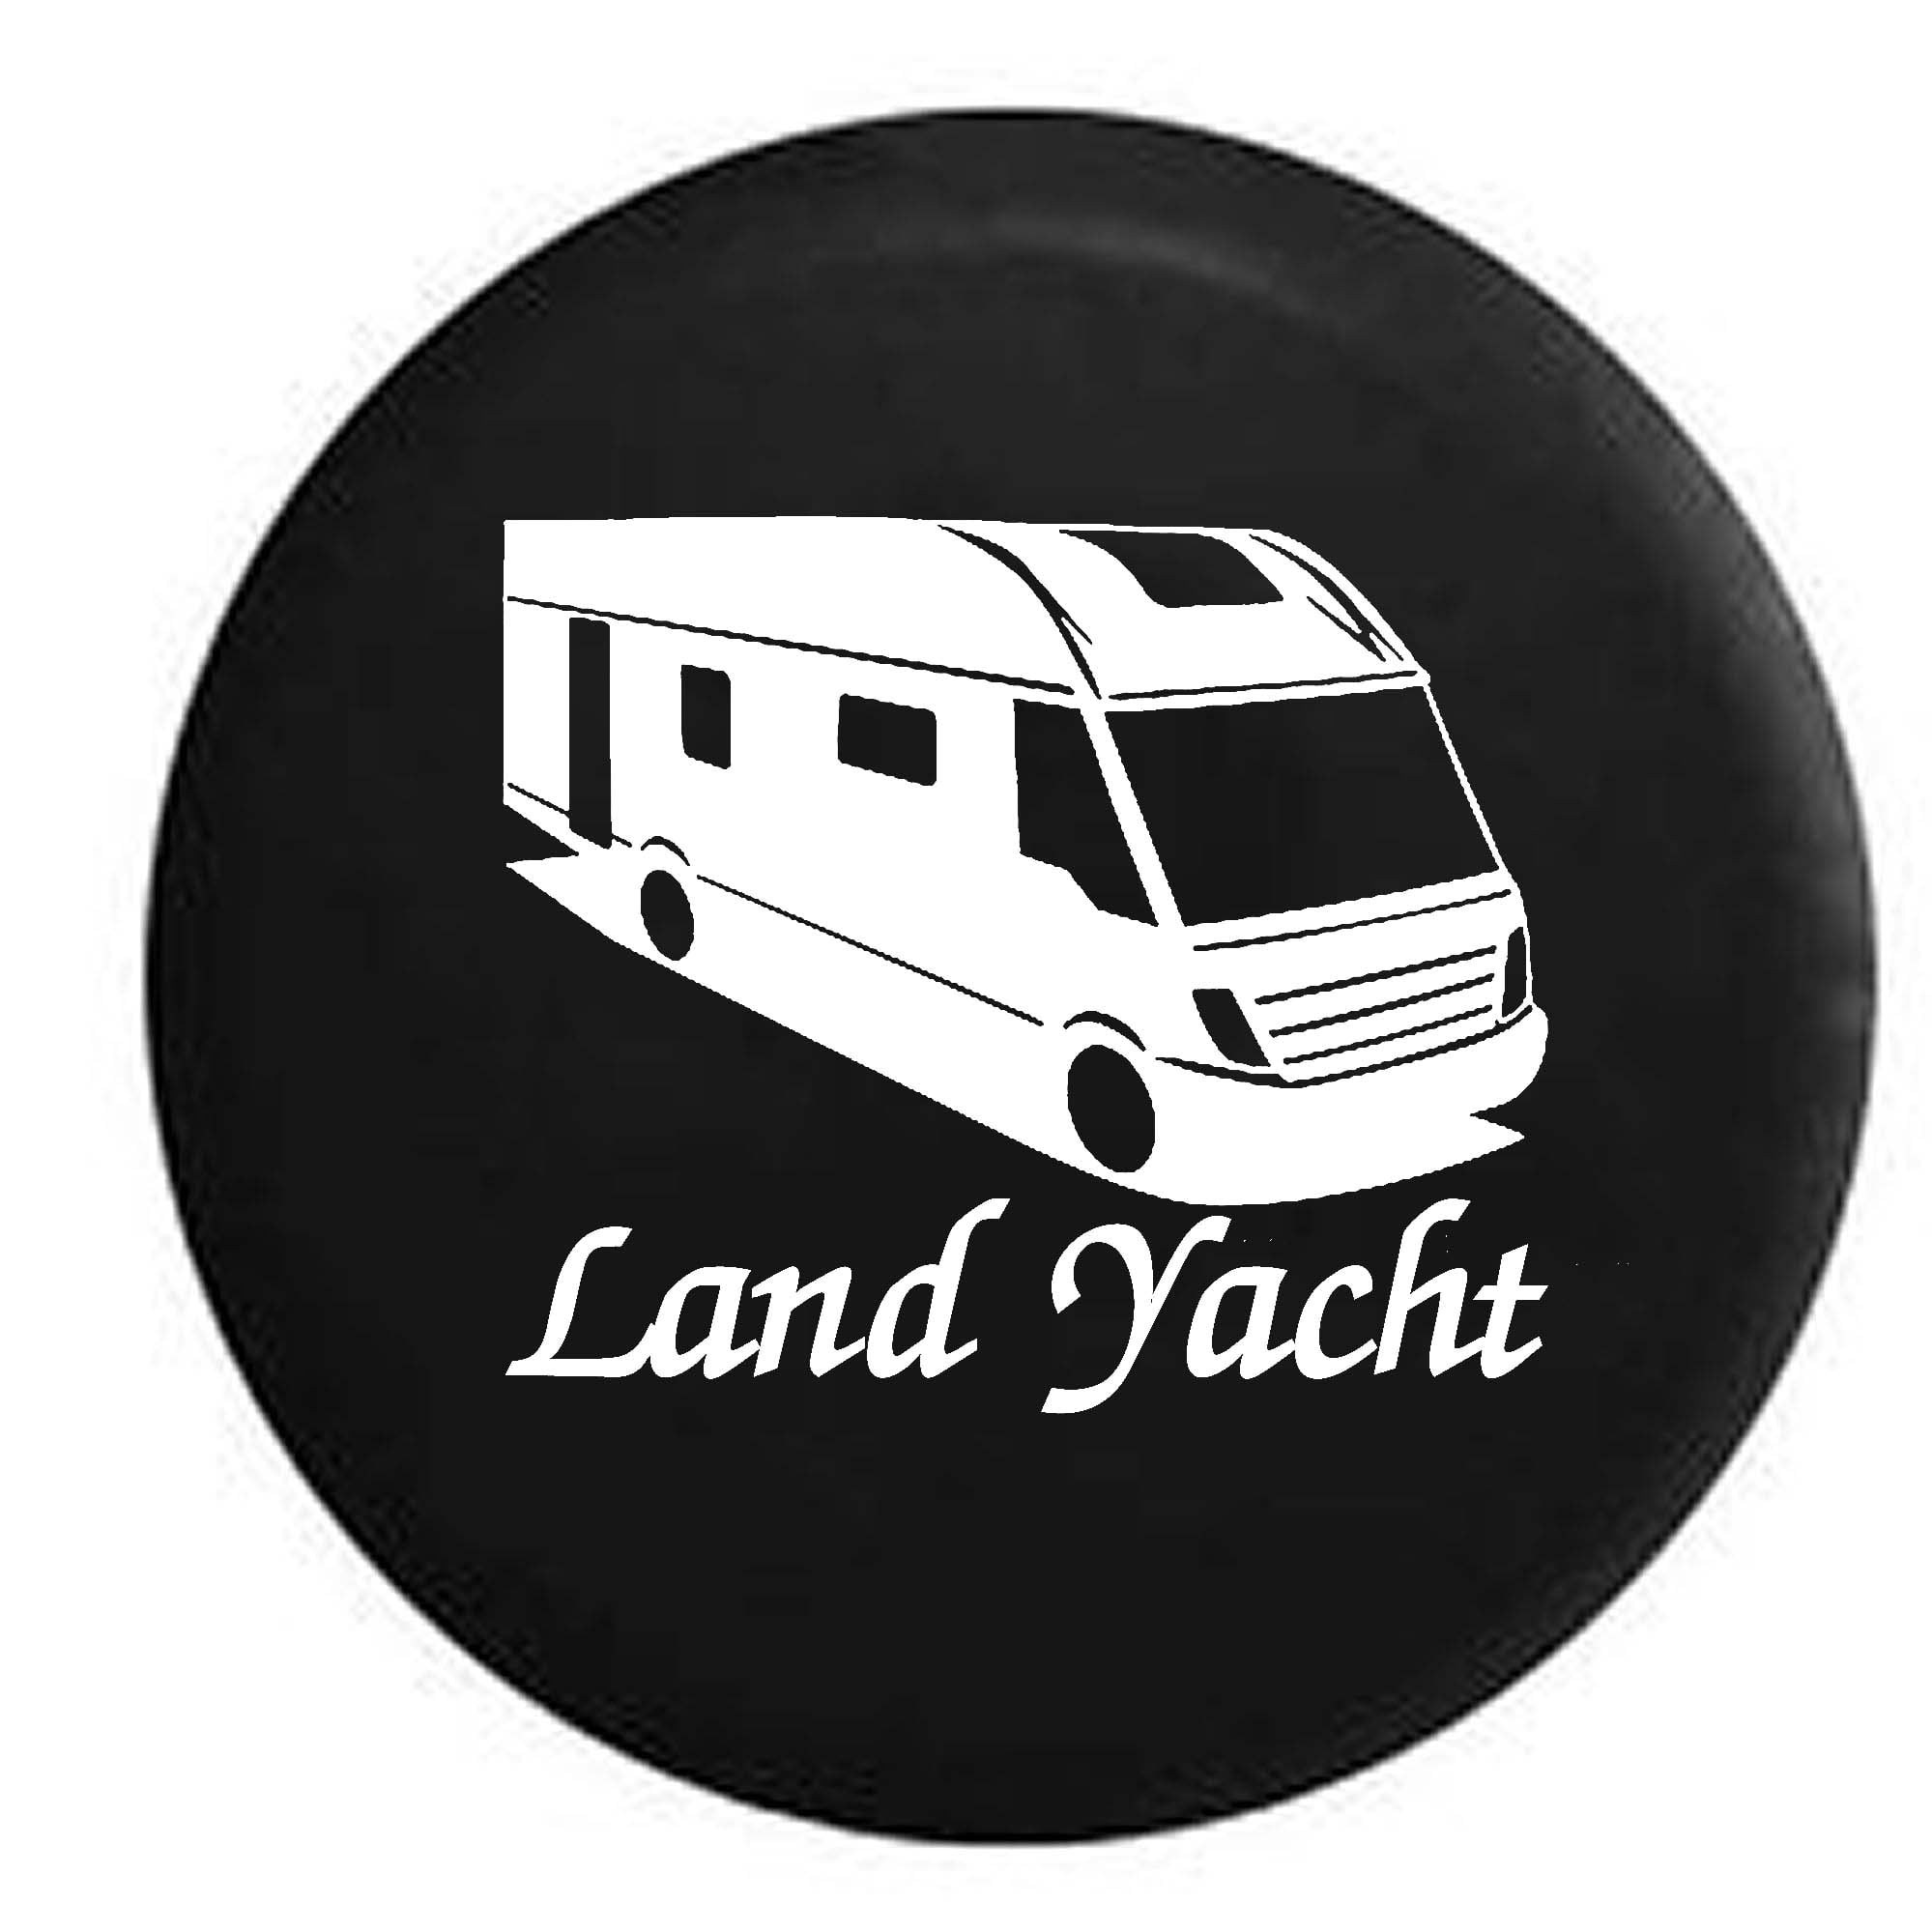 Motorhome RV Land Yacht Camper Trailer Spare Tire Cover Vinyl Black 31 in 